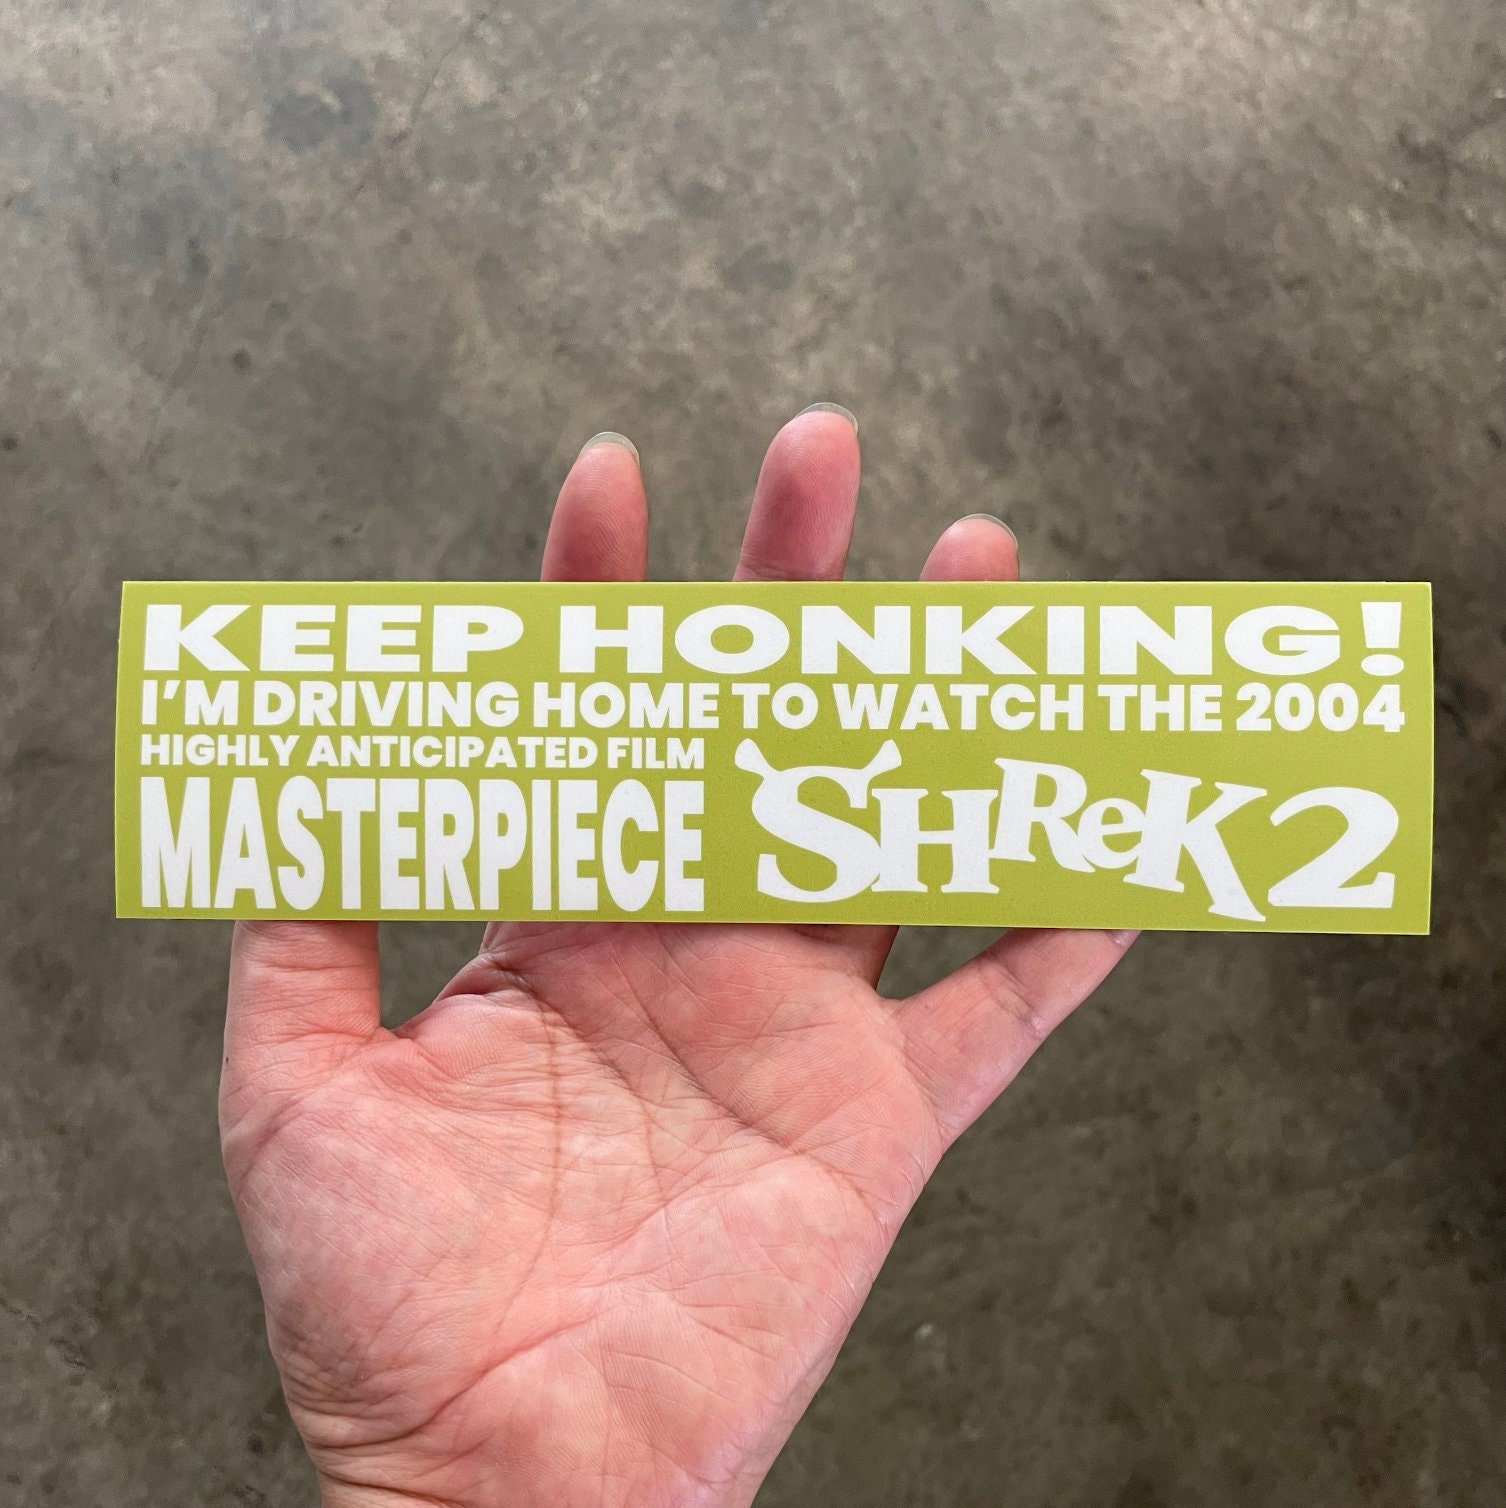  Shrek Yikes Face Sticker - Sticker Graphic - Auto, Wall,  Laptop, Cell, Truck Sticker for Windows, Cars, Trucks : Automotive